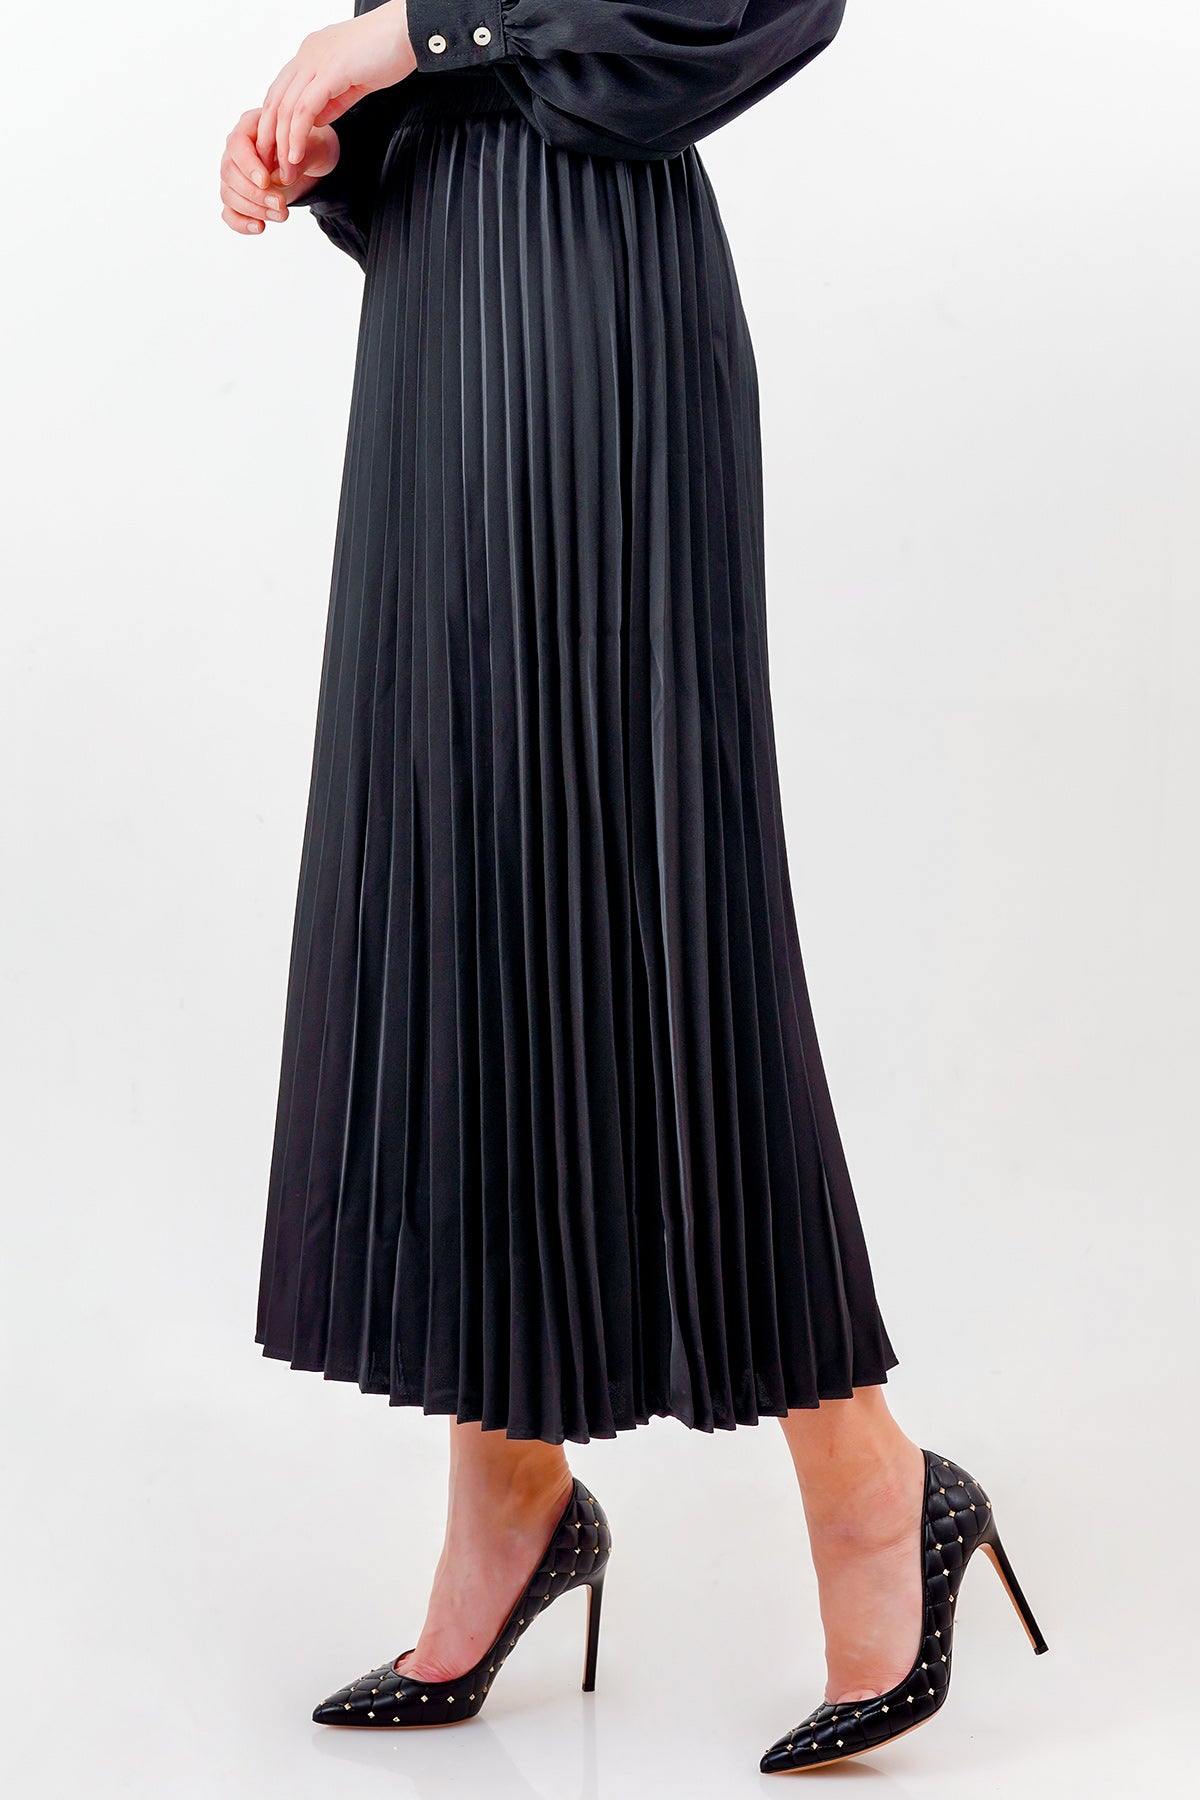 Satin Pleats Skirt - Black